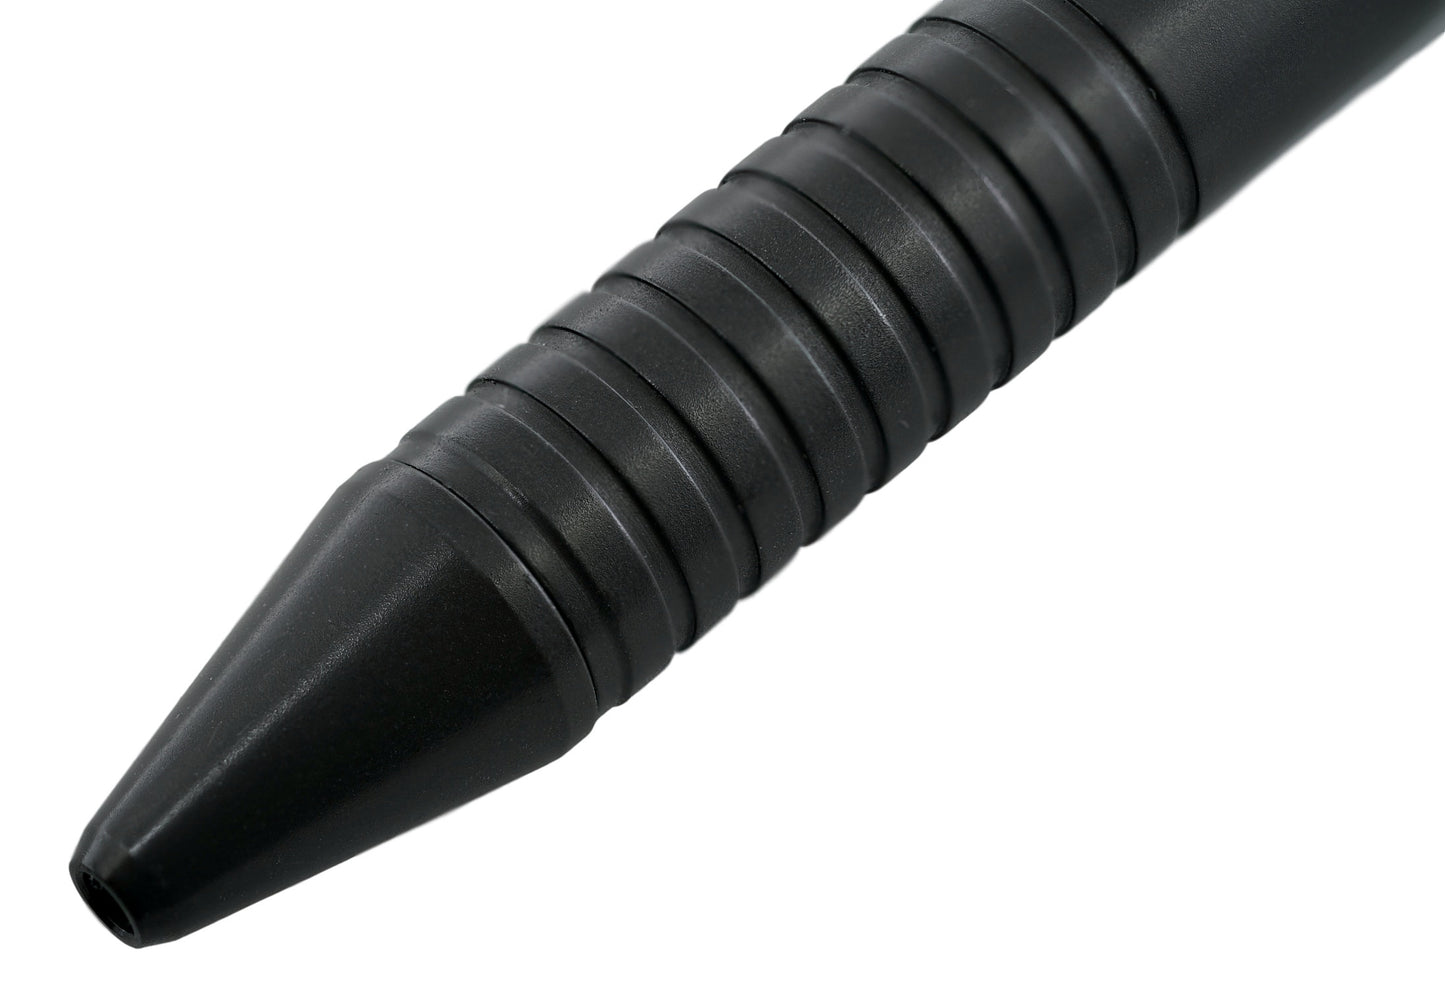 Valtcan Impel Titanium EDC Pen Gear for EDC Space Black 44g